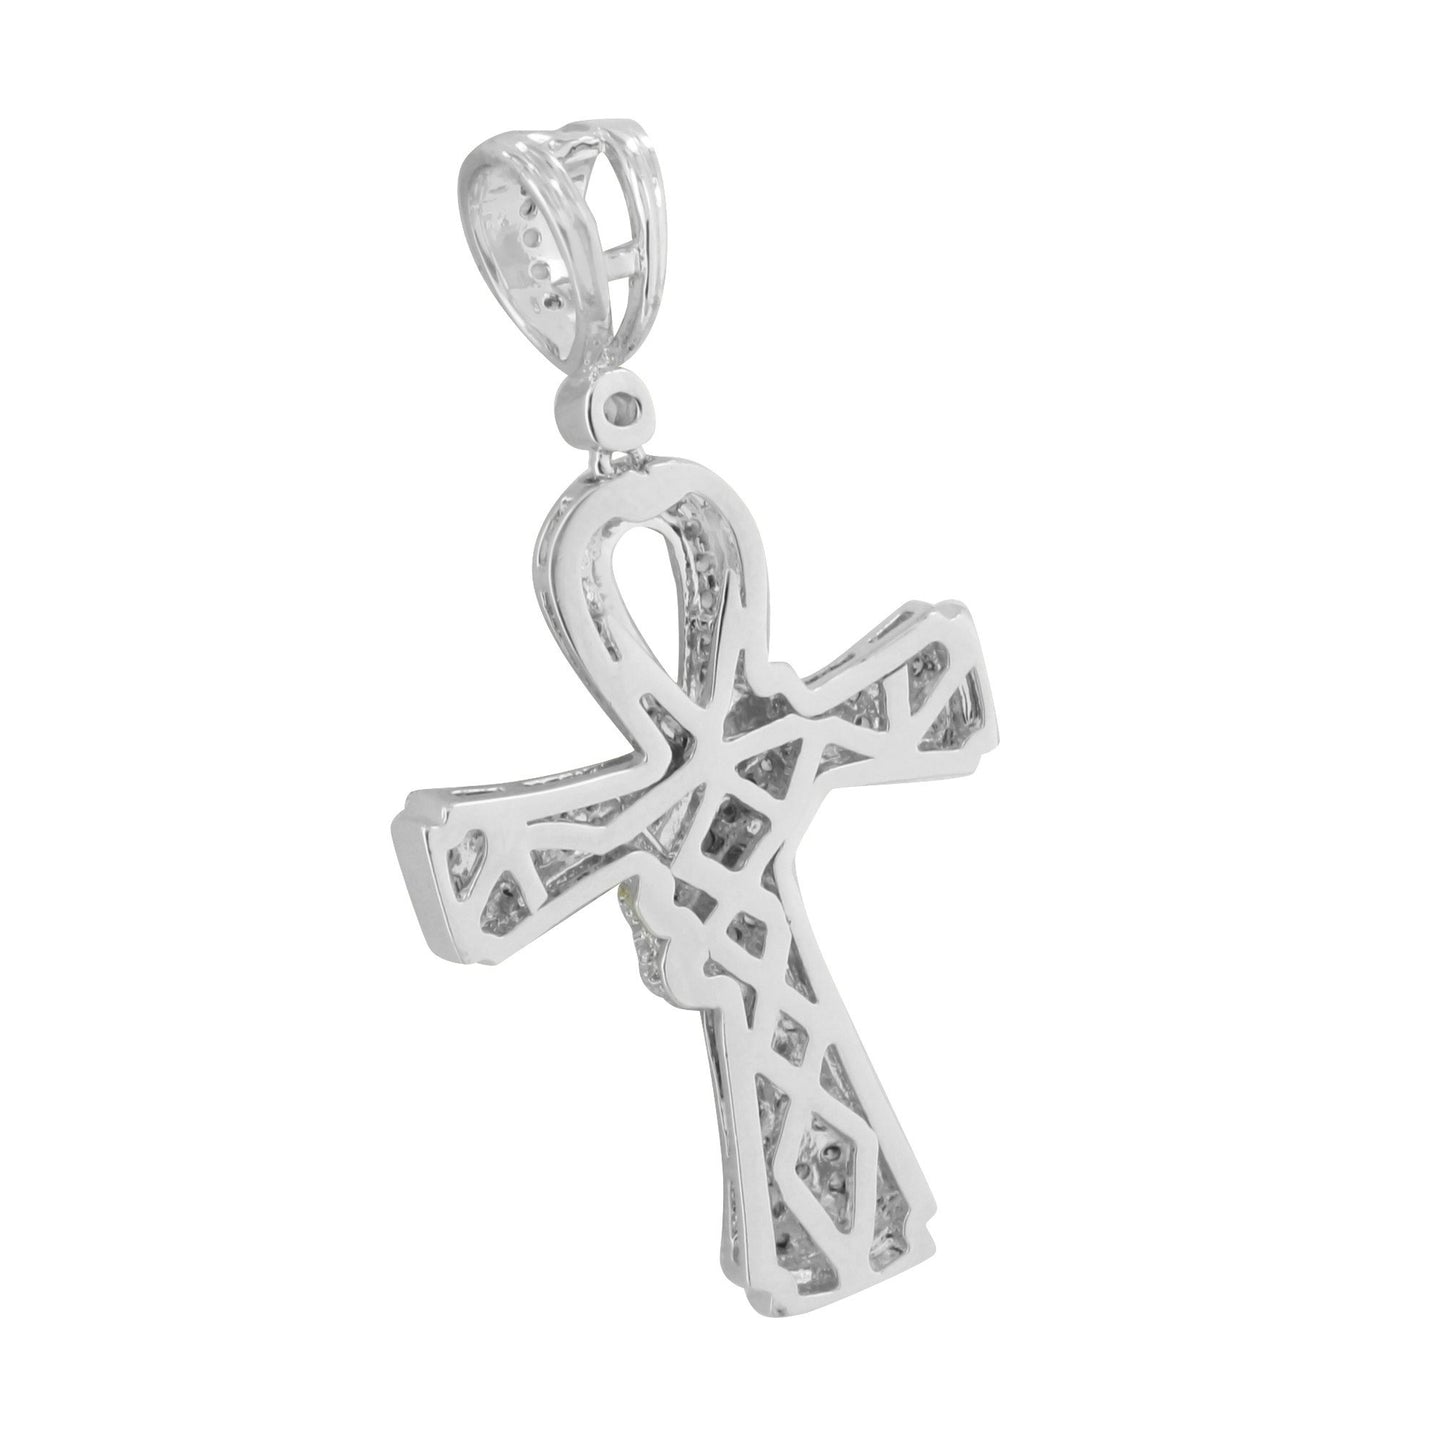 White Ankh Cross Pendant Simulated Diamonds Bling Symbol Of Life